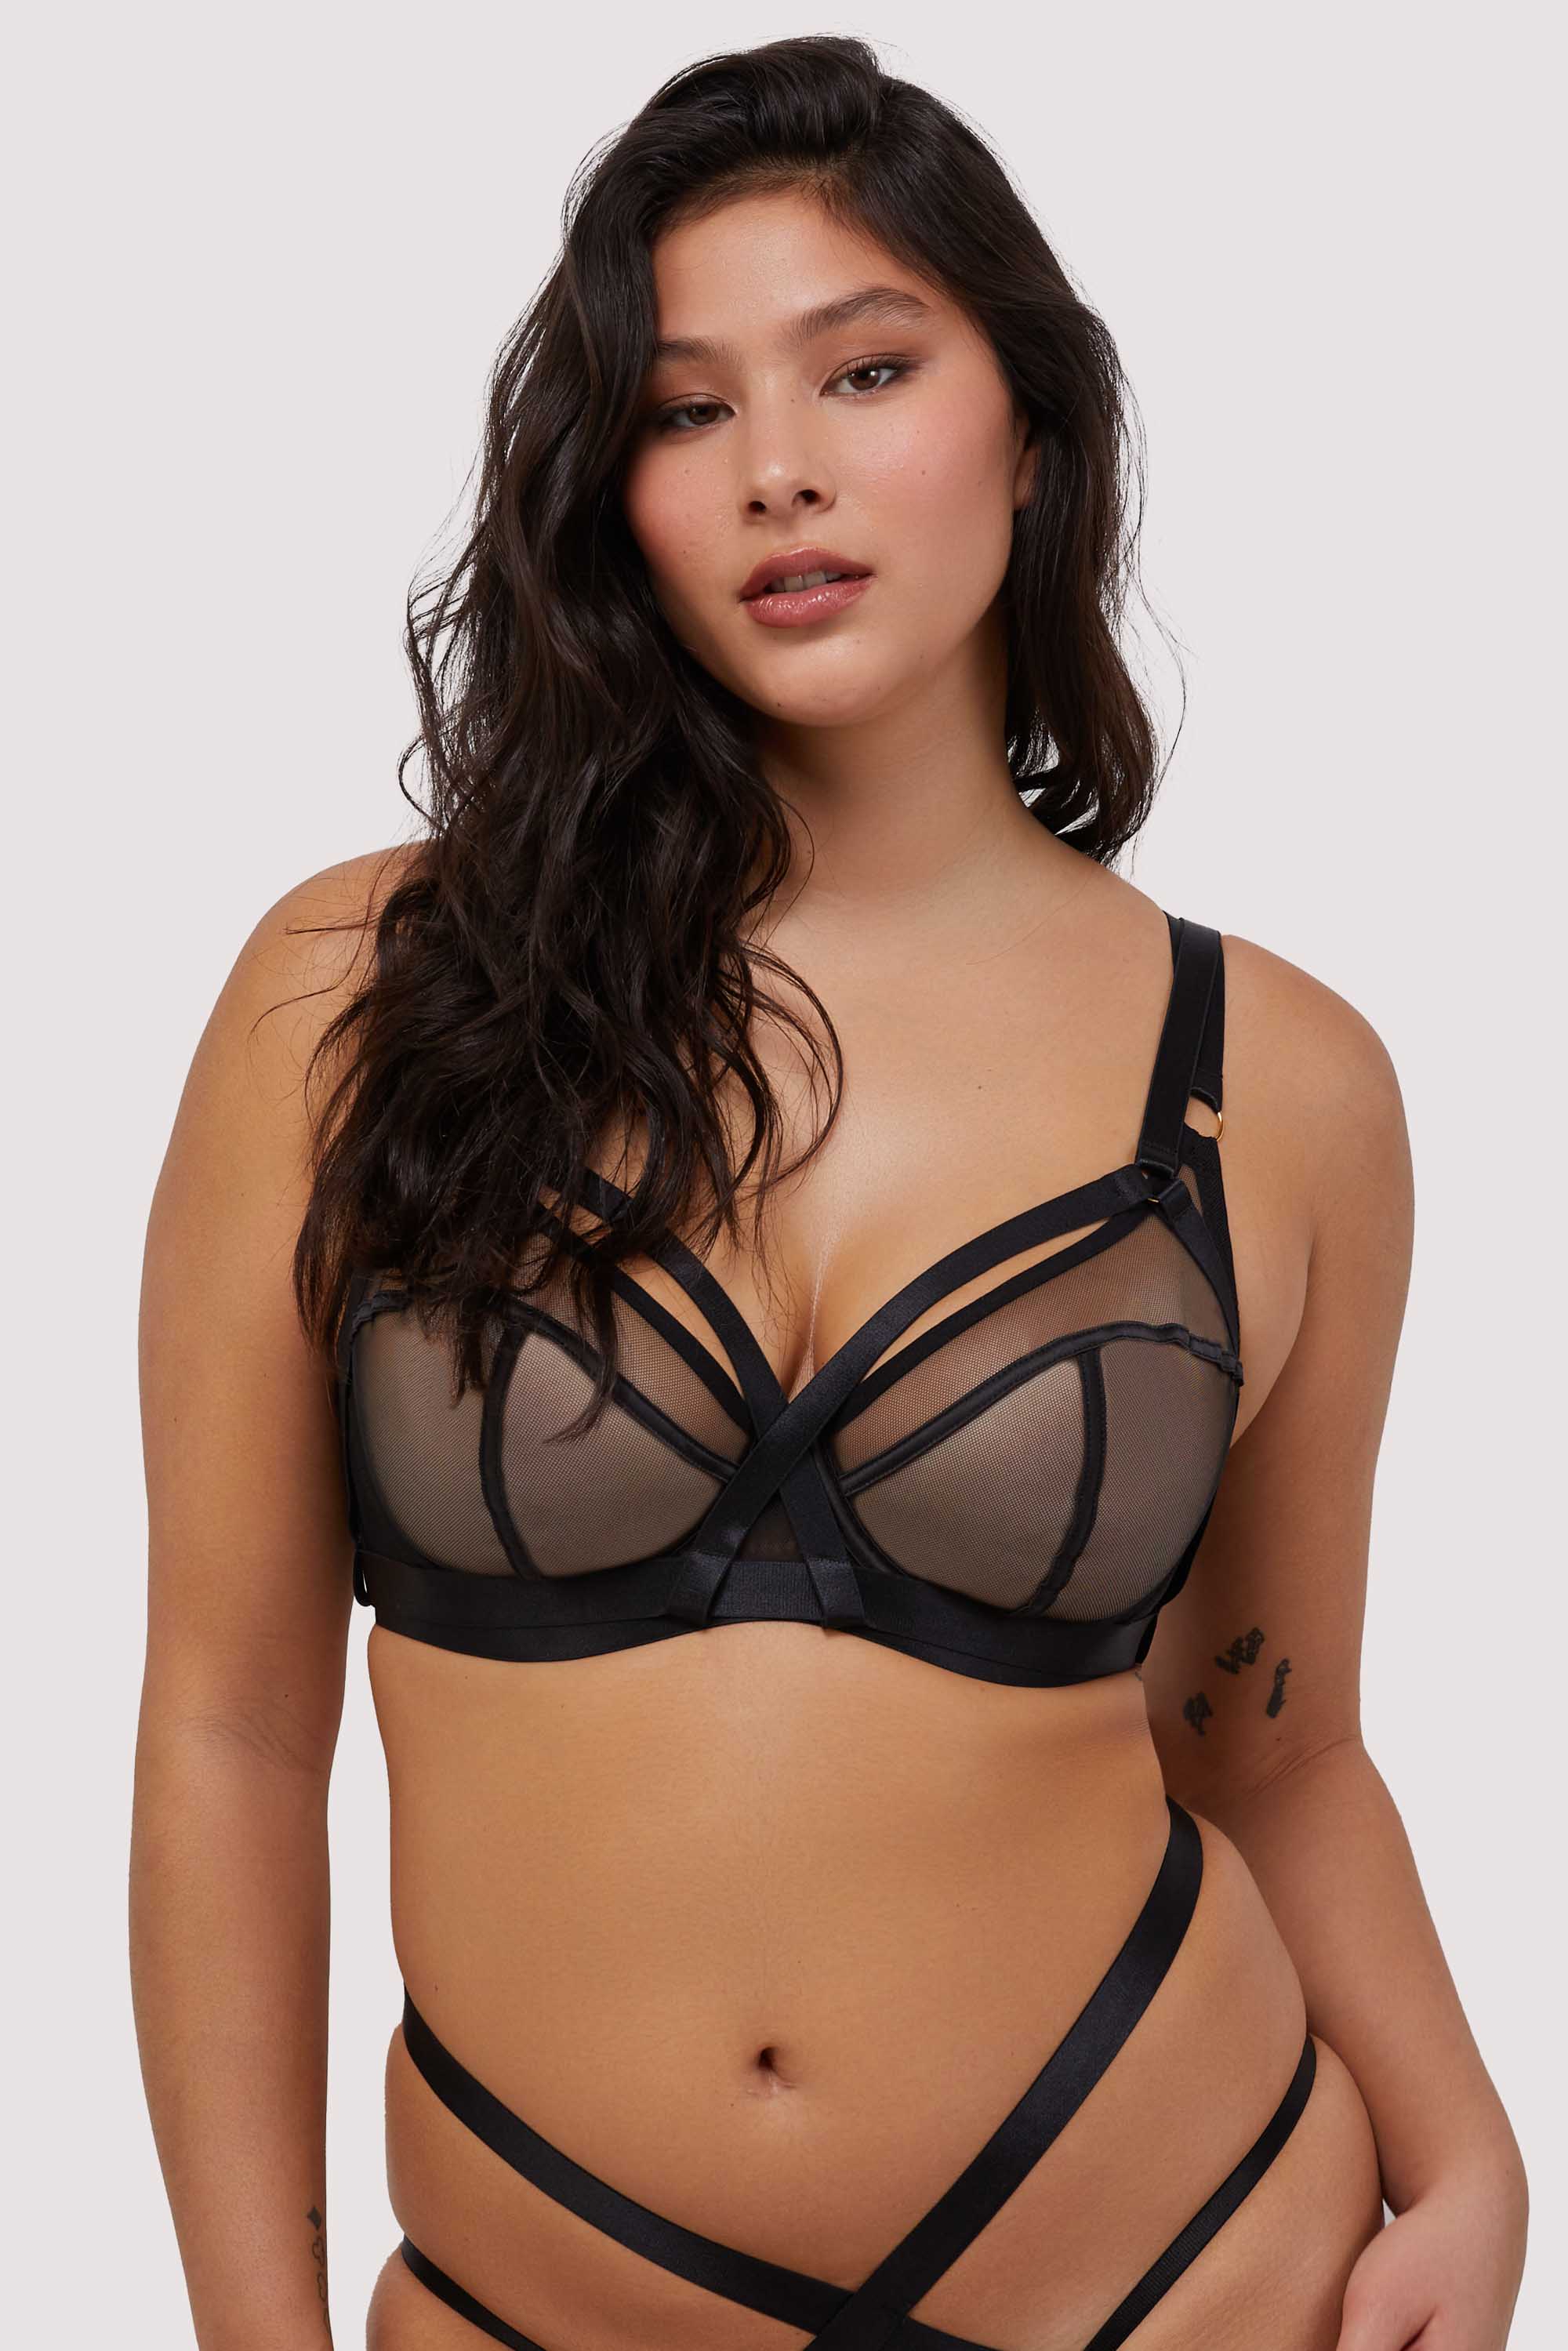 Model wears black mesh balcony bra with harness straps